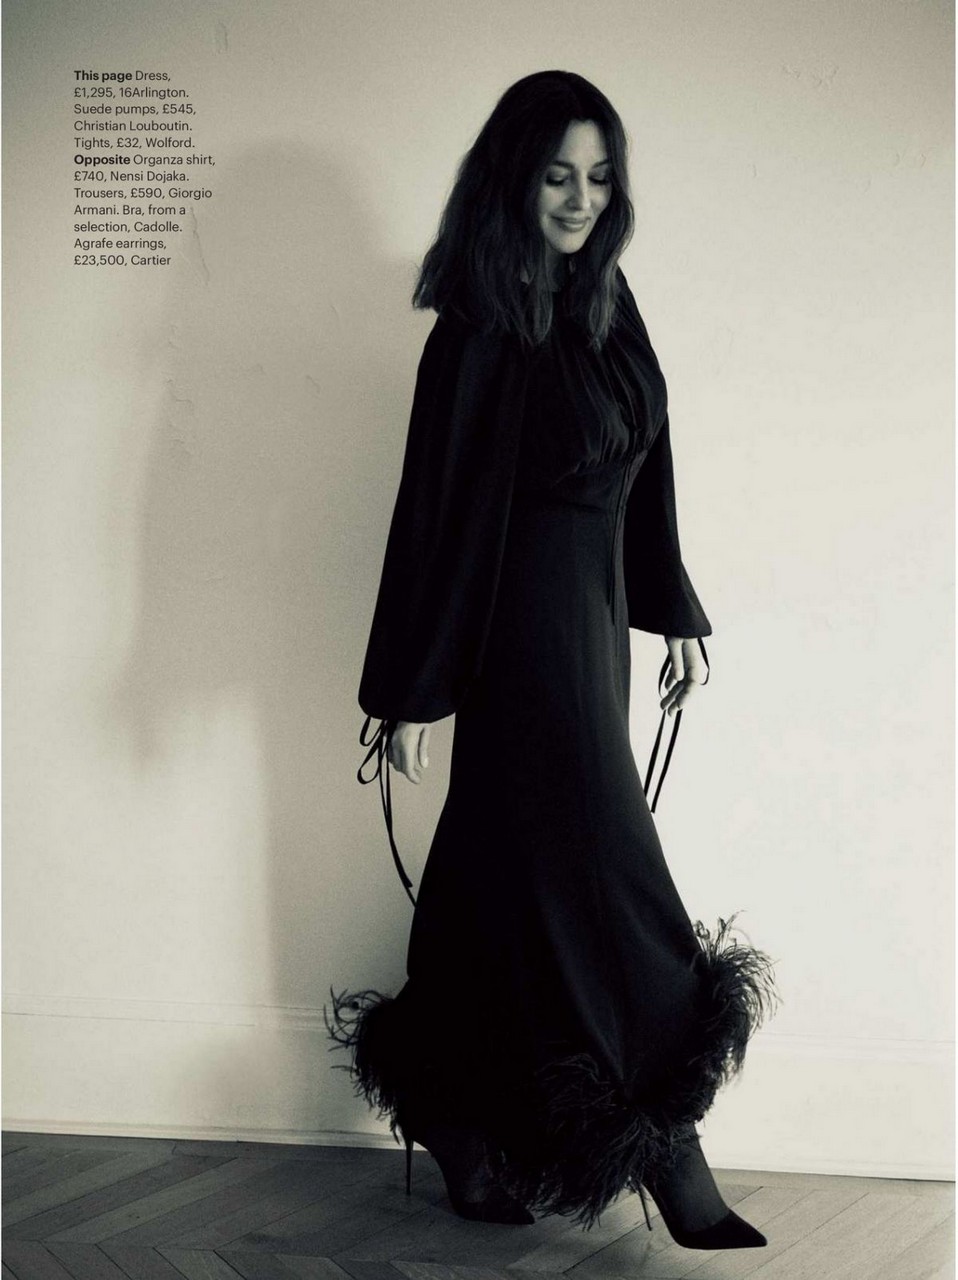 Monica Bellucci Sunday Times Style Magazine December